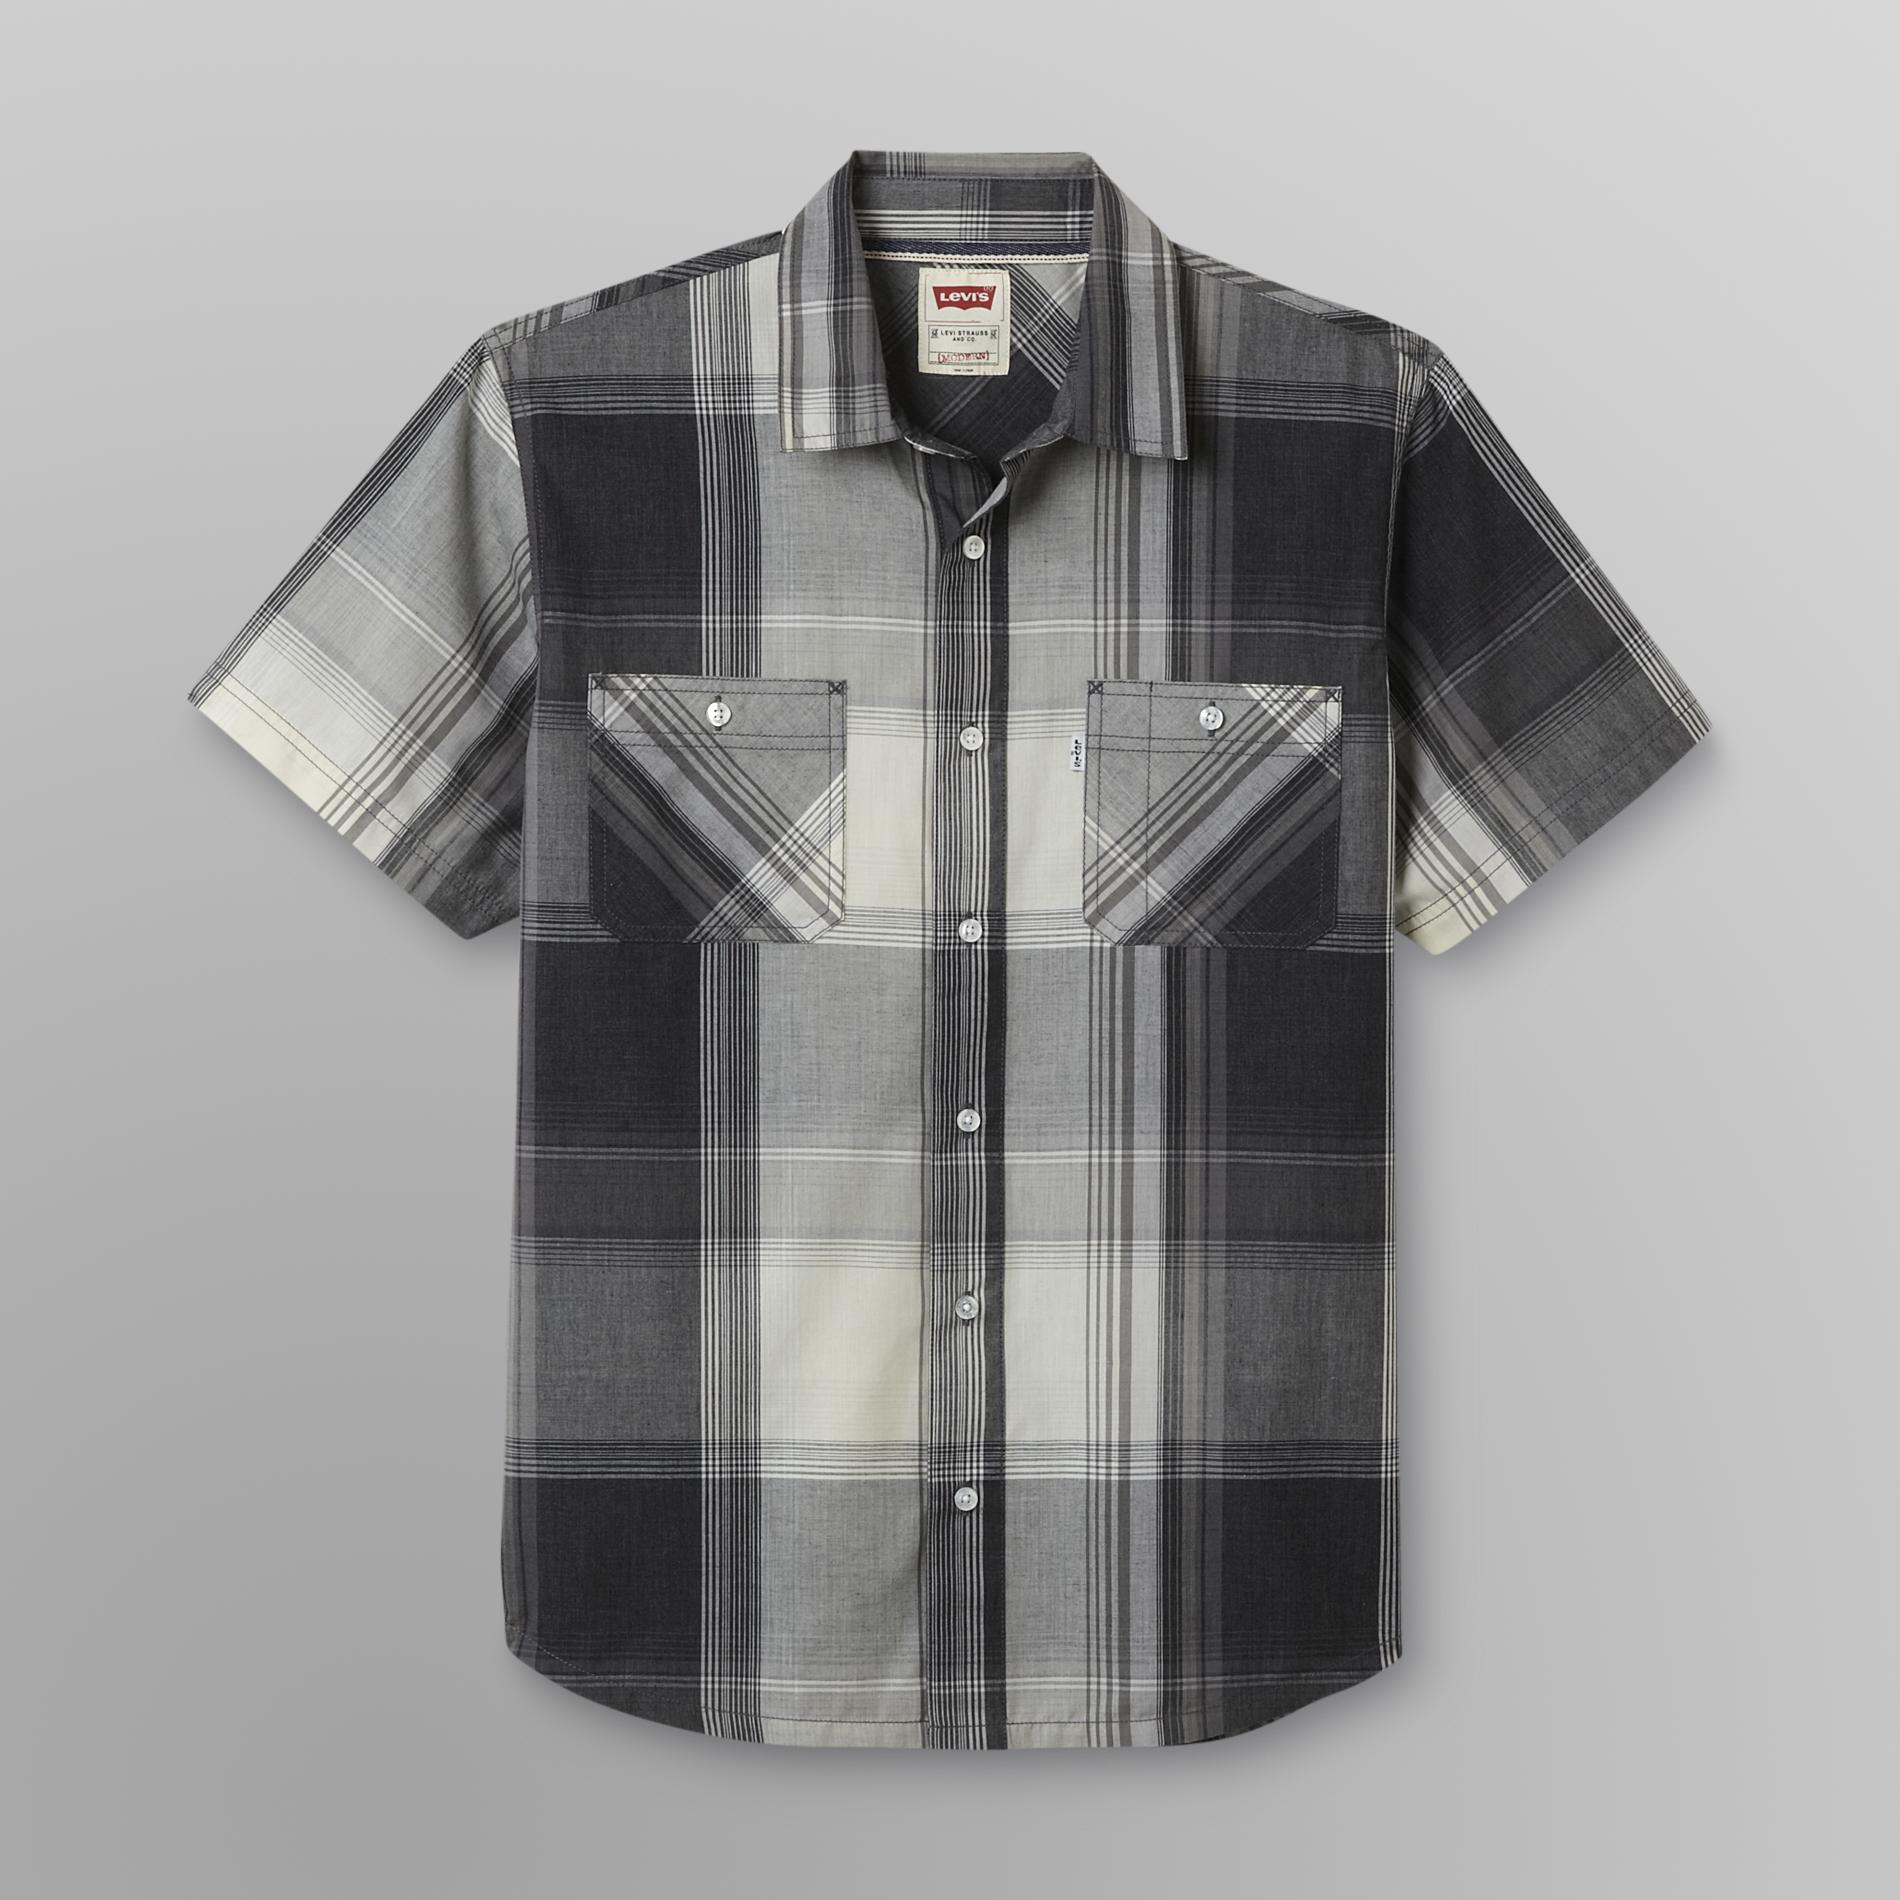 Levi's Men's Short-Sleeve Shirt - Plaid